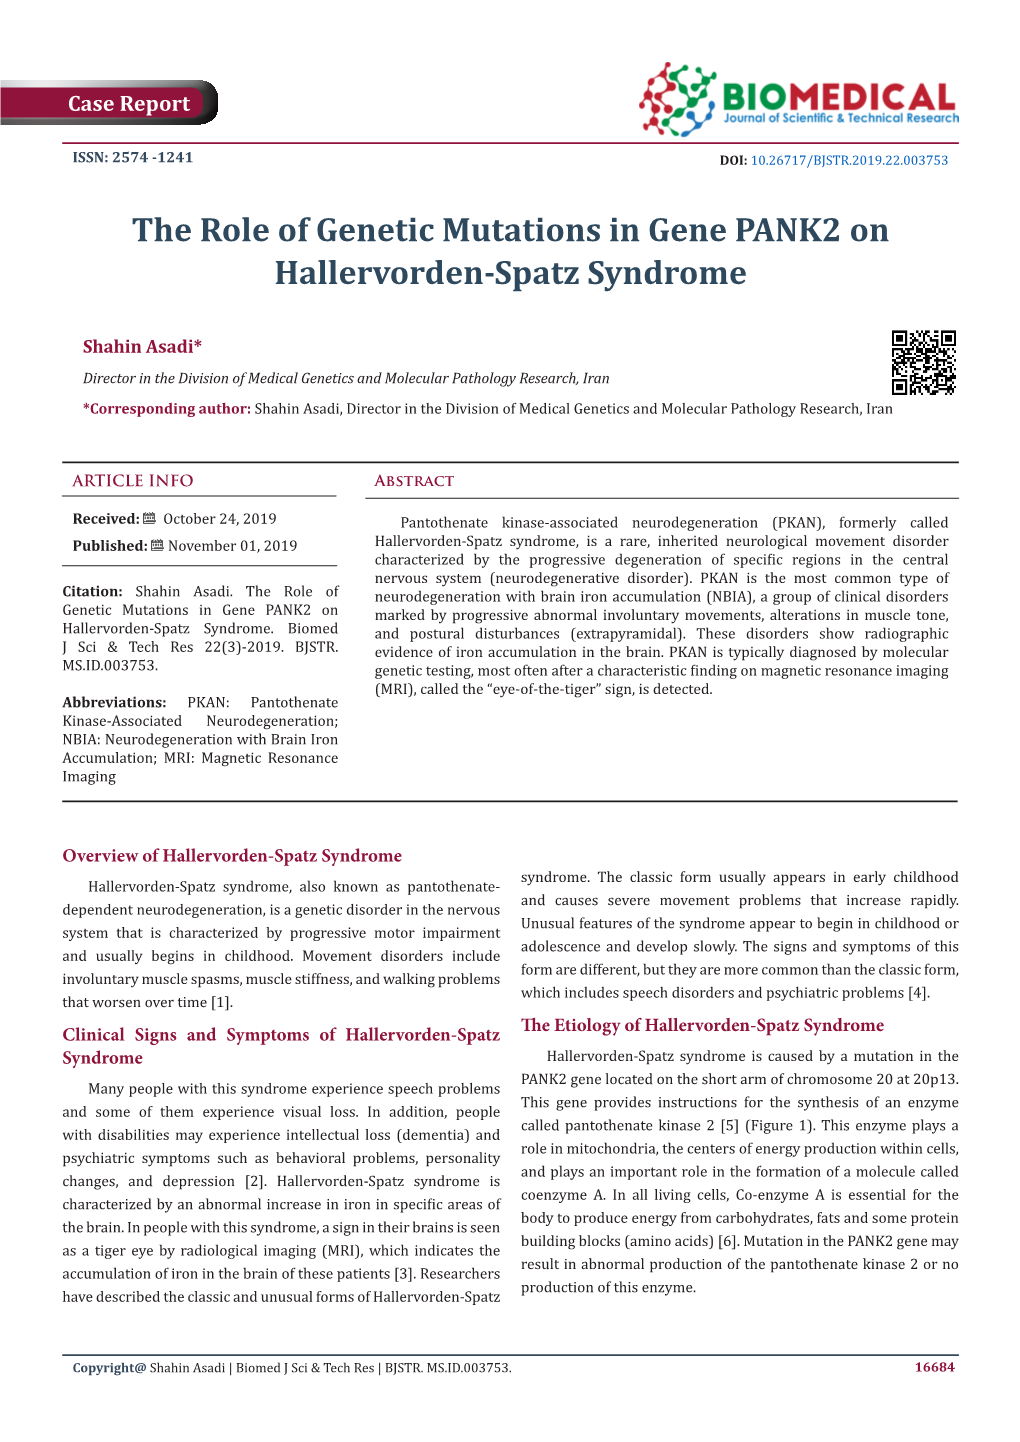 The Role of Genetic Mutations in Gene PANK2 on Hallervorden-Spatz Syndrome